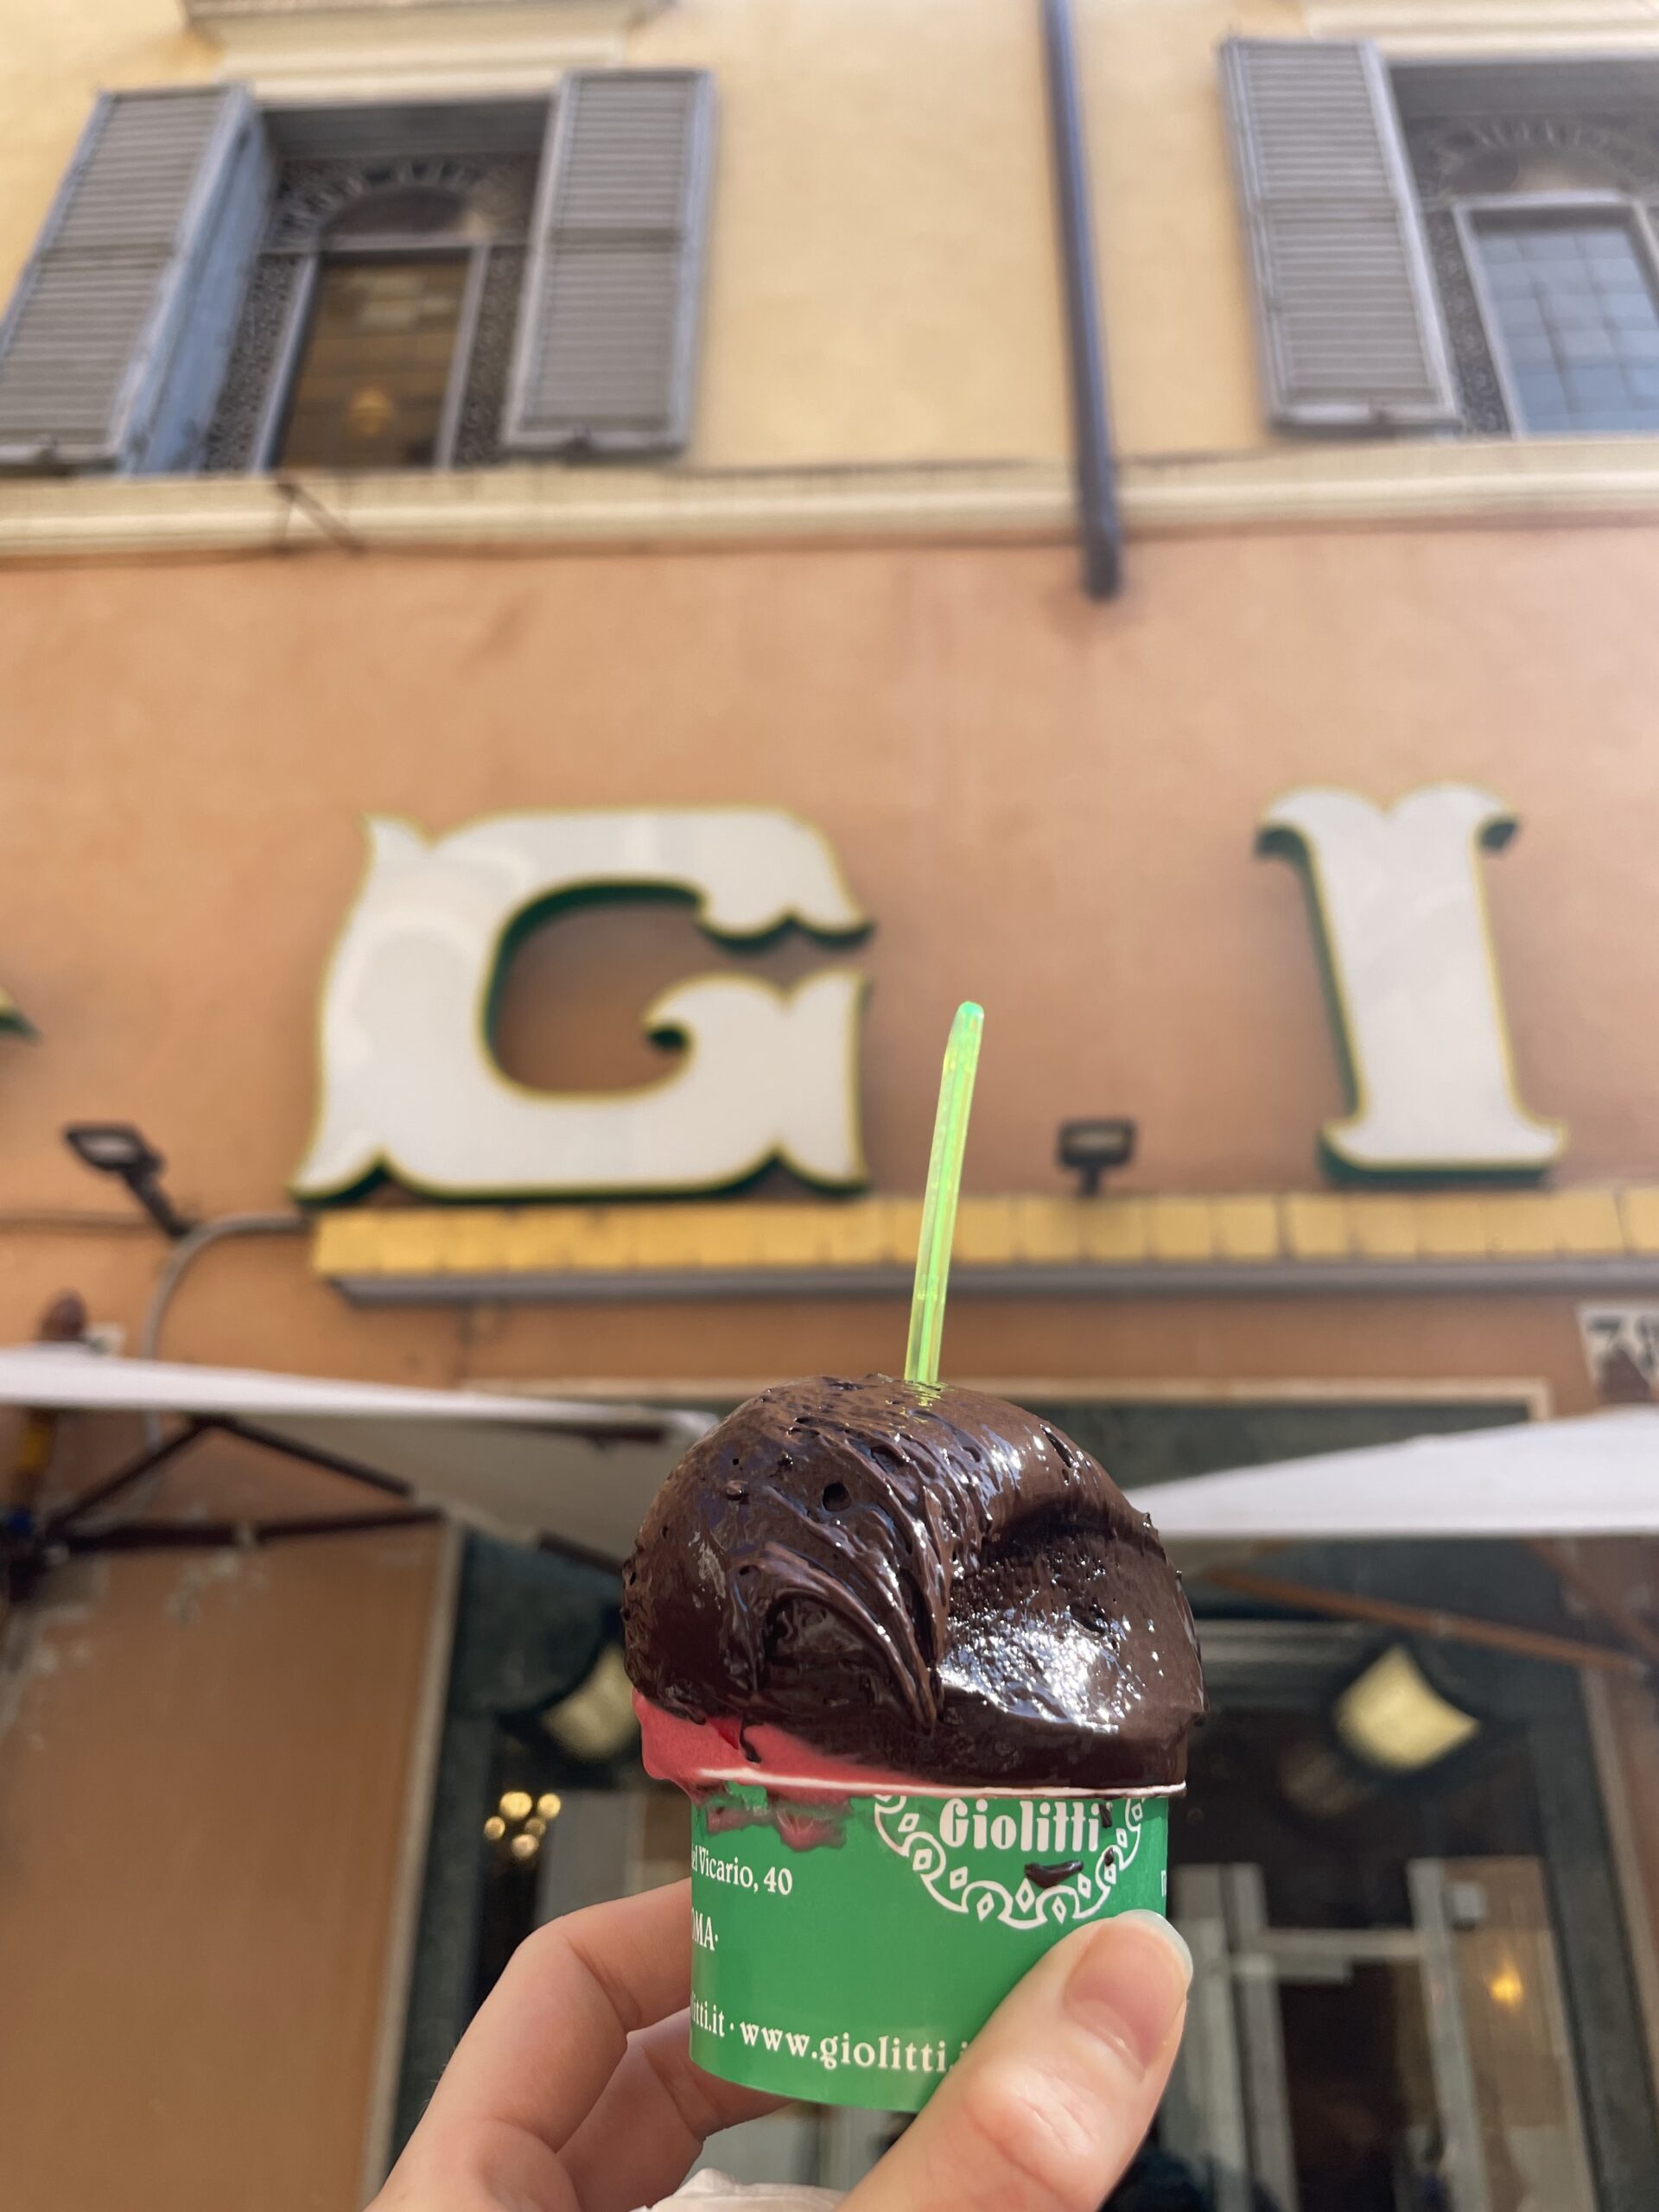 The best gluten-free gelato in Rome